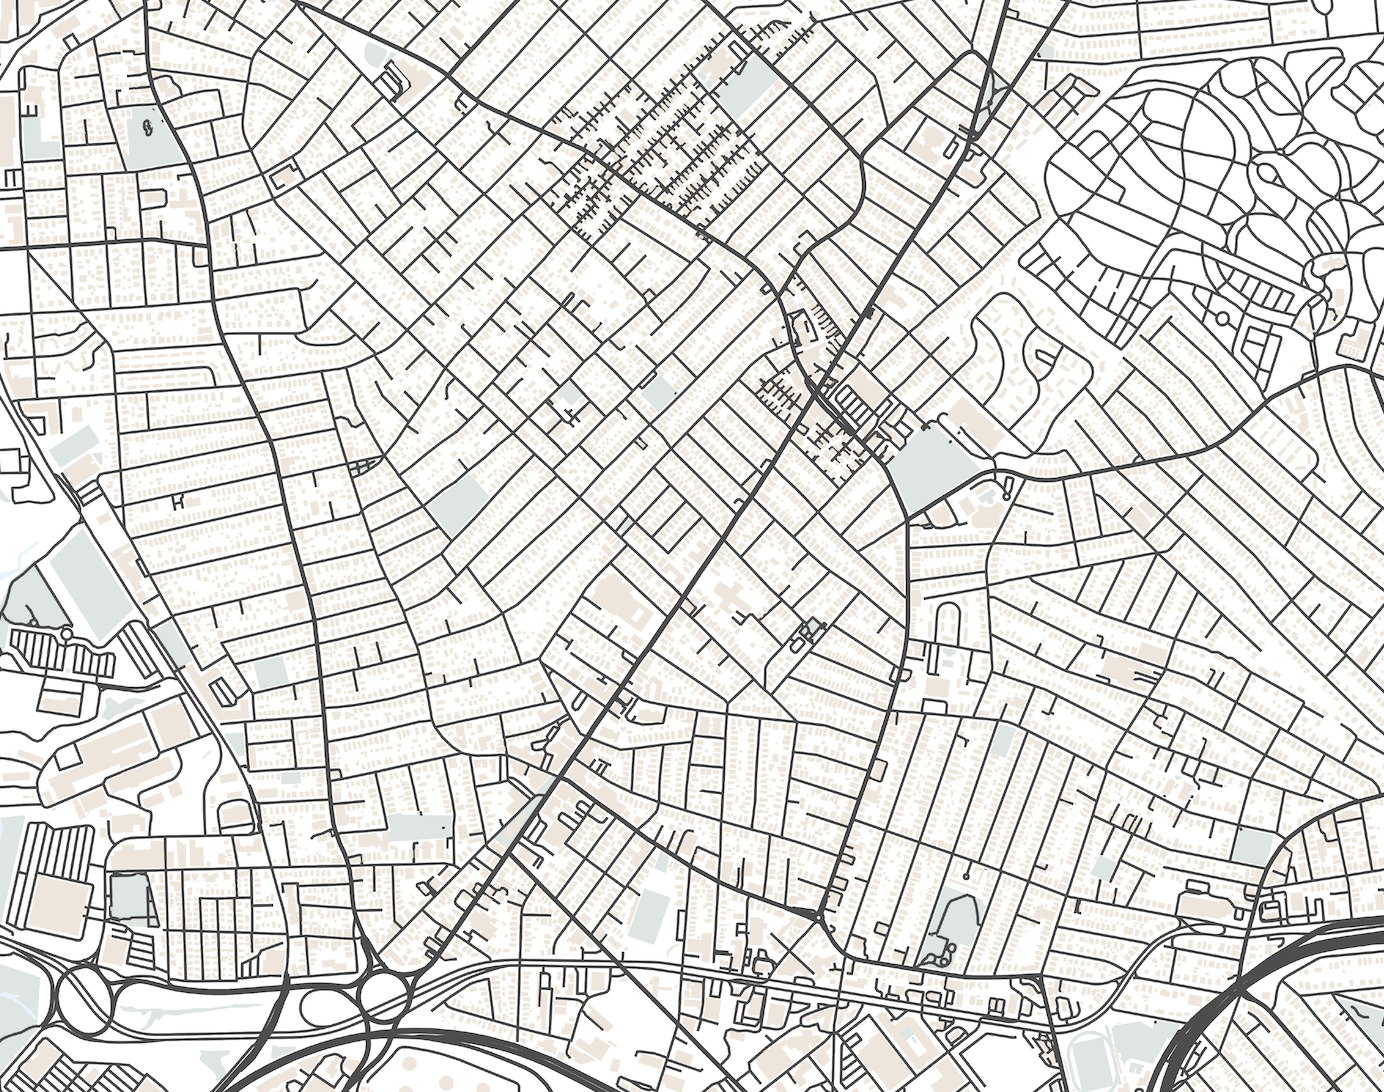 Everett Map Print